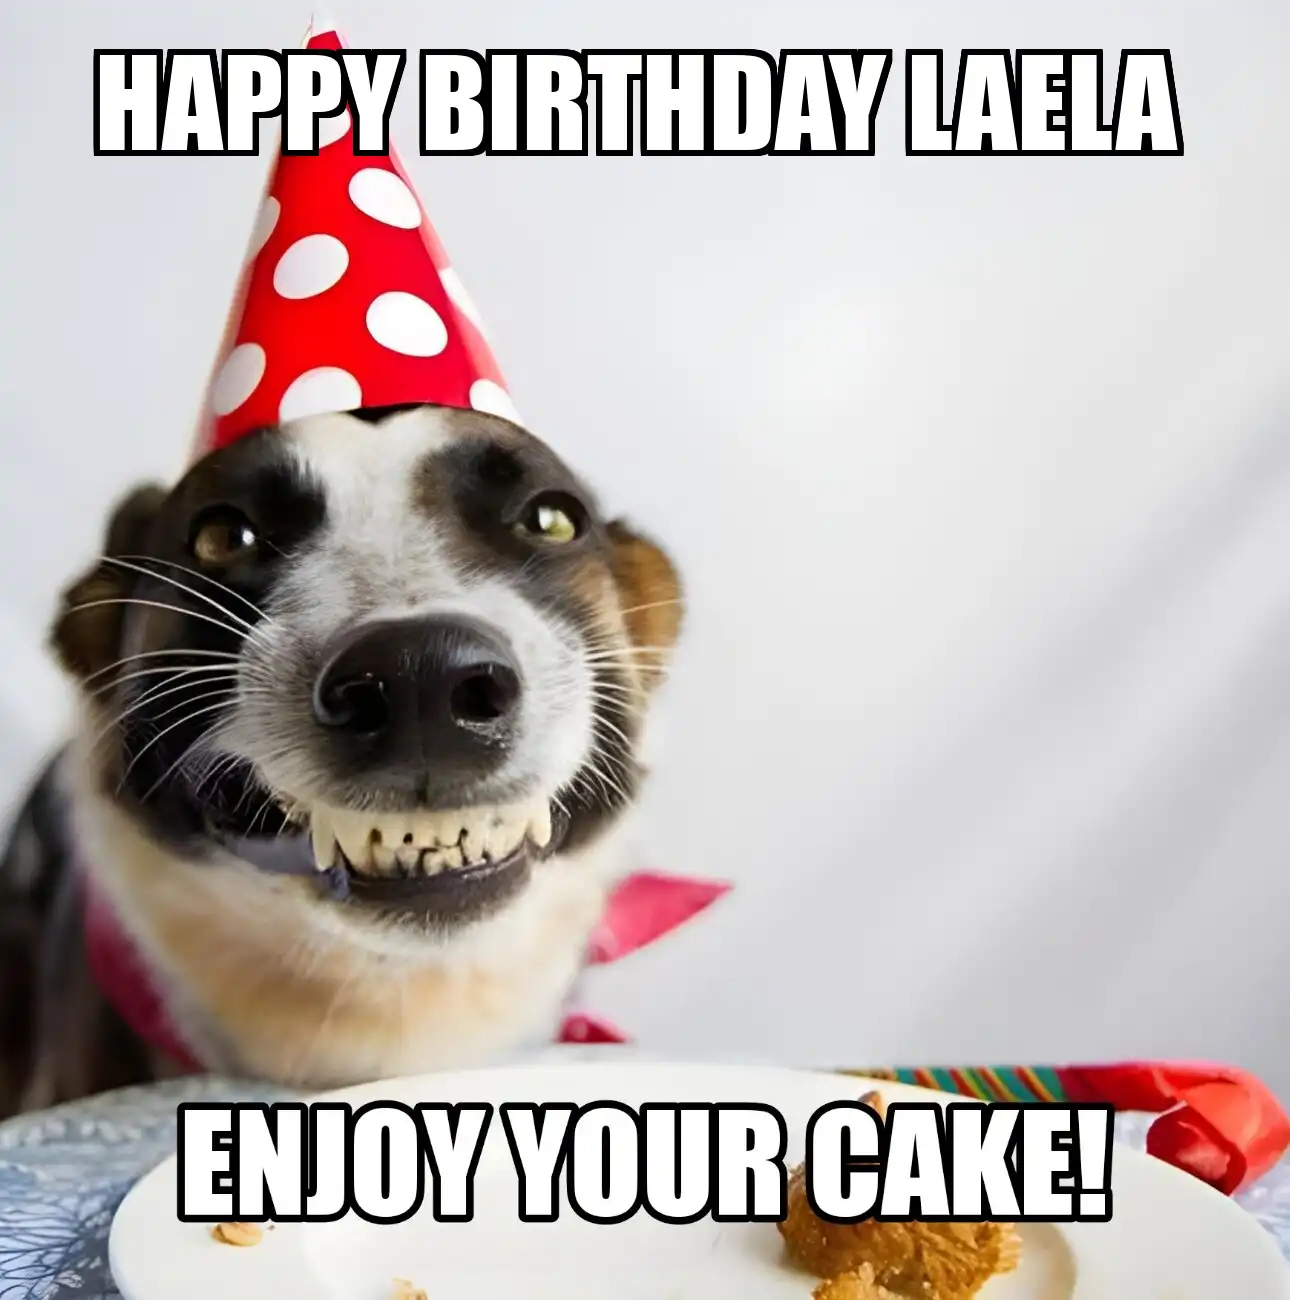 Happy Birthday Laela Enjoy Your Cake Dog Meme